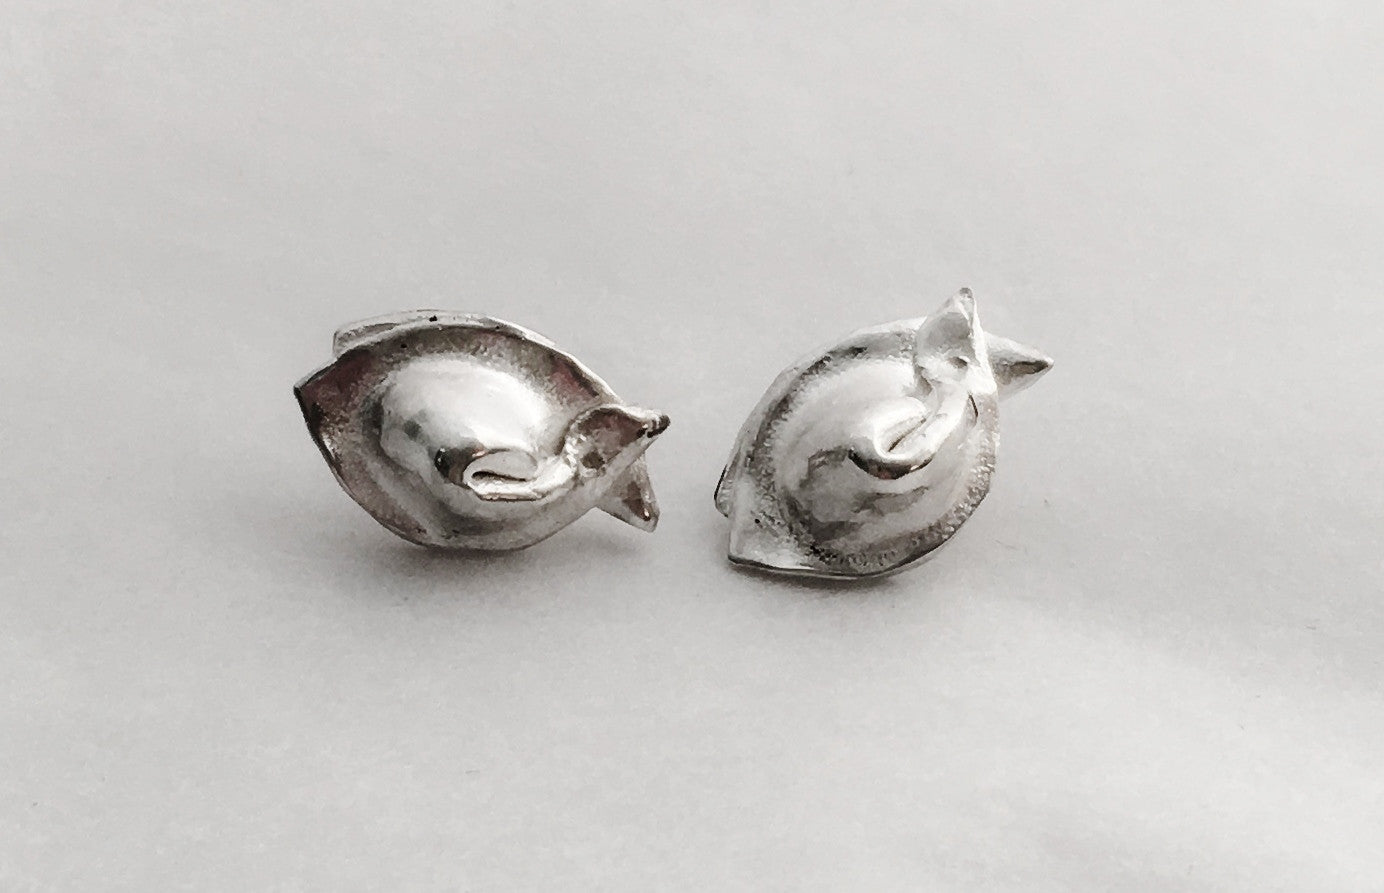 Chinese Wonton Dumpling Stud Earrings in Sterling Silver